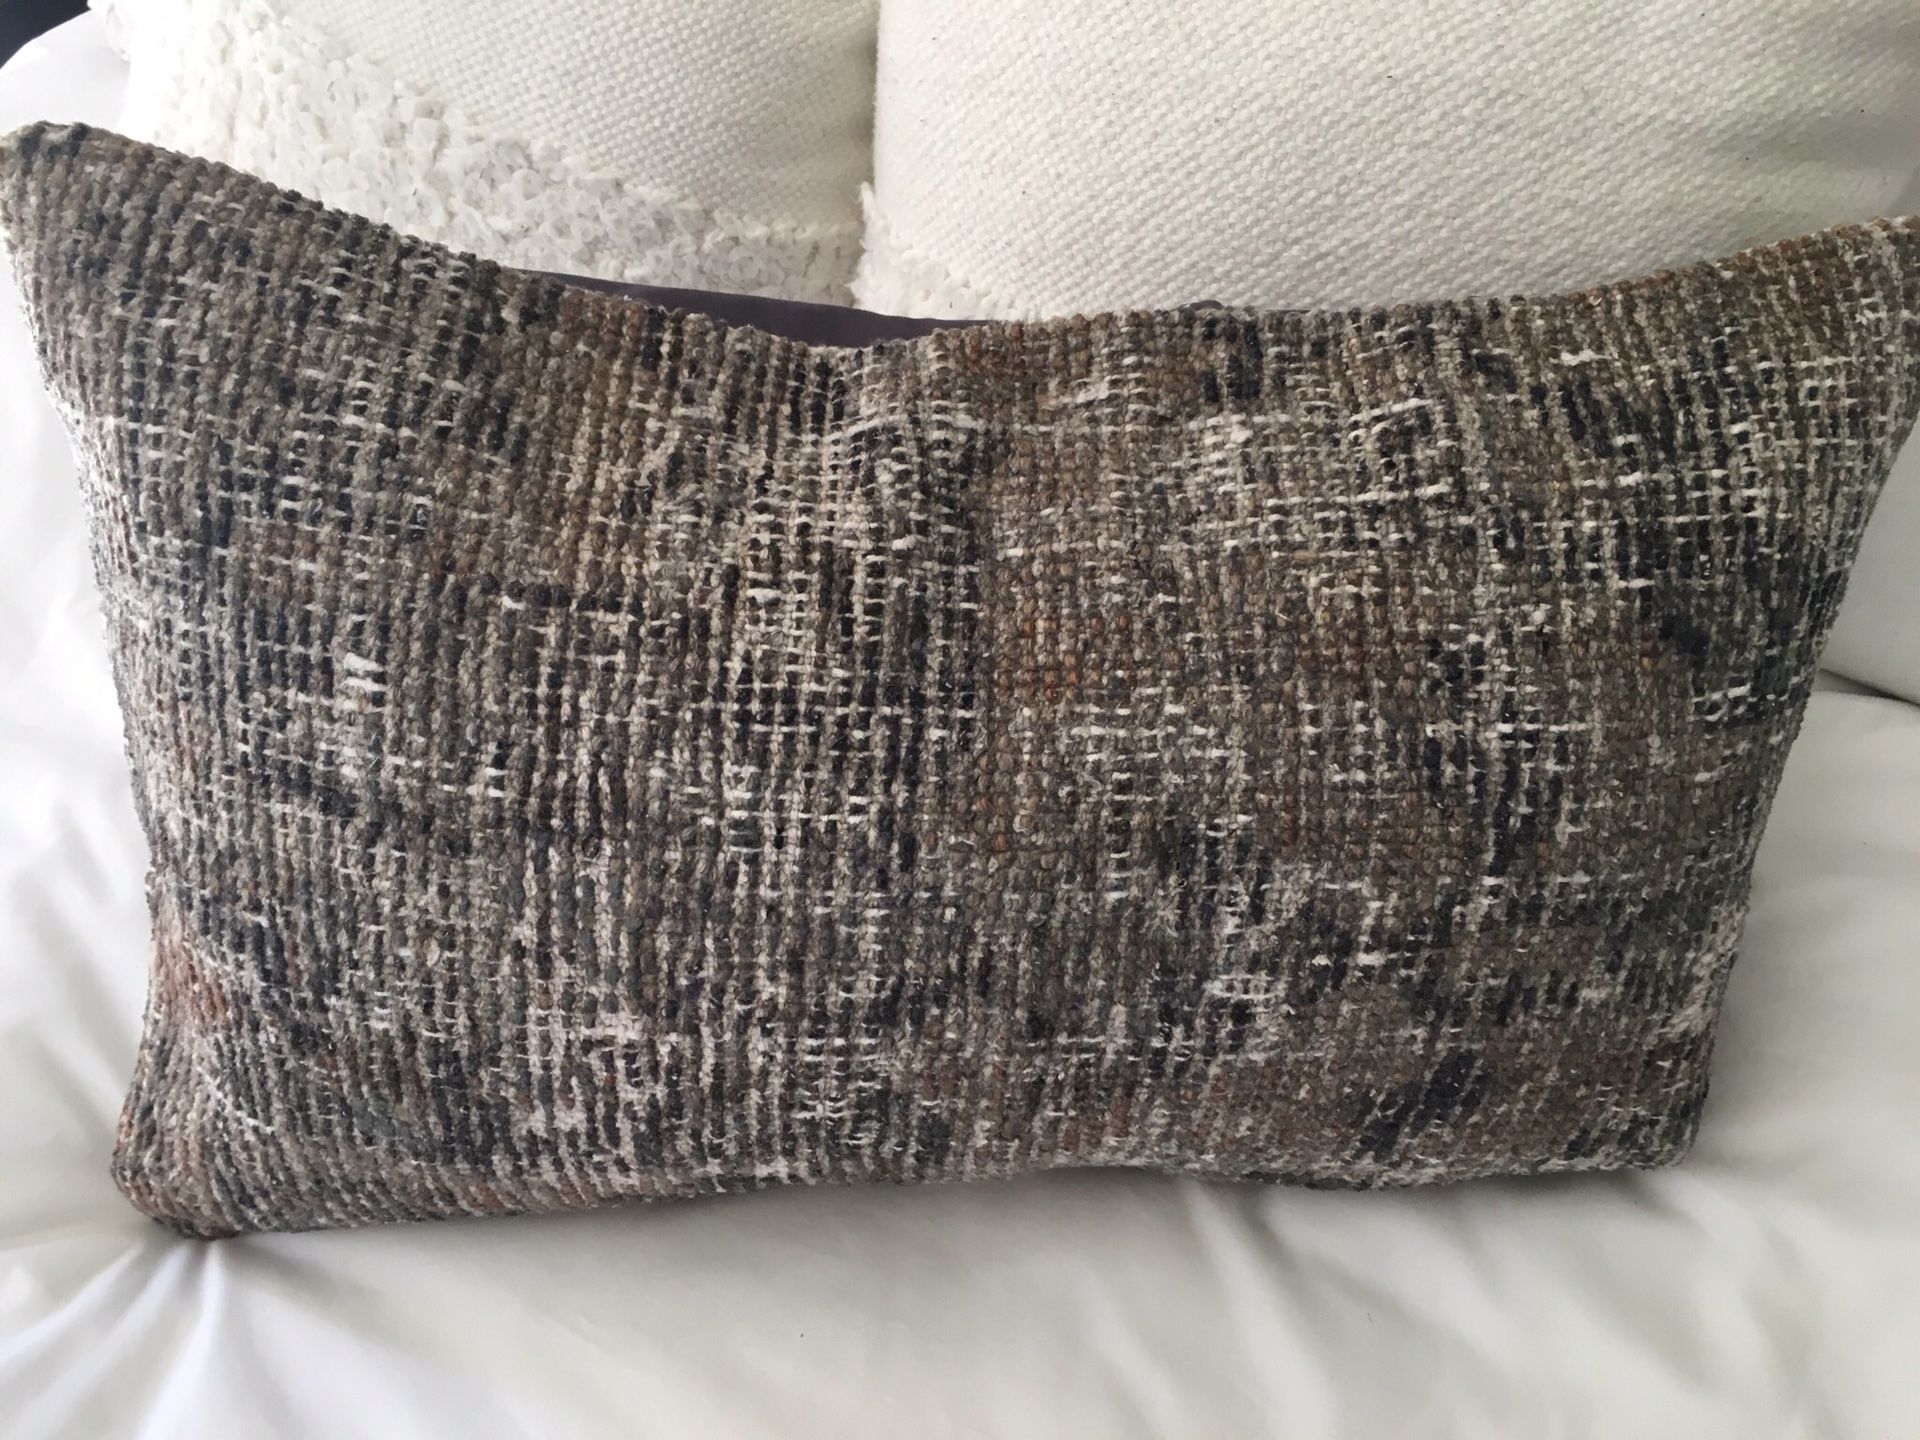 Brand new authentic Turkish kilim lumbar pillow (16” x 24”)